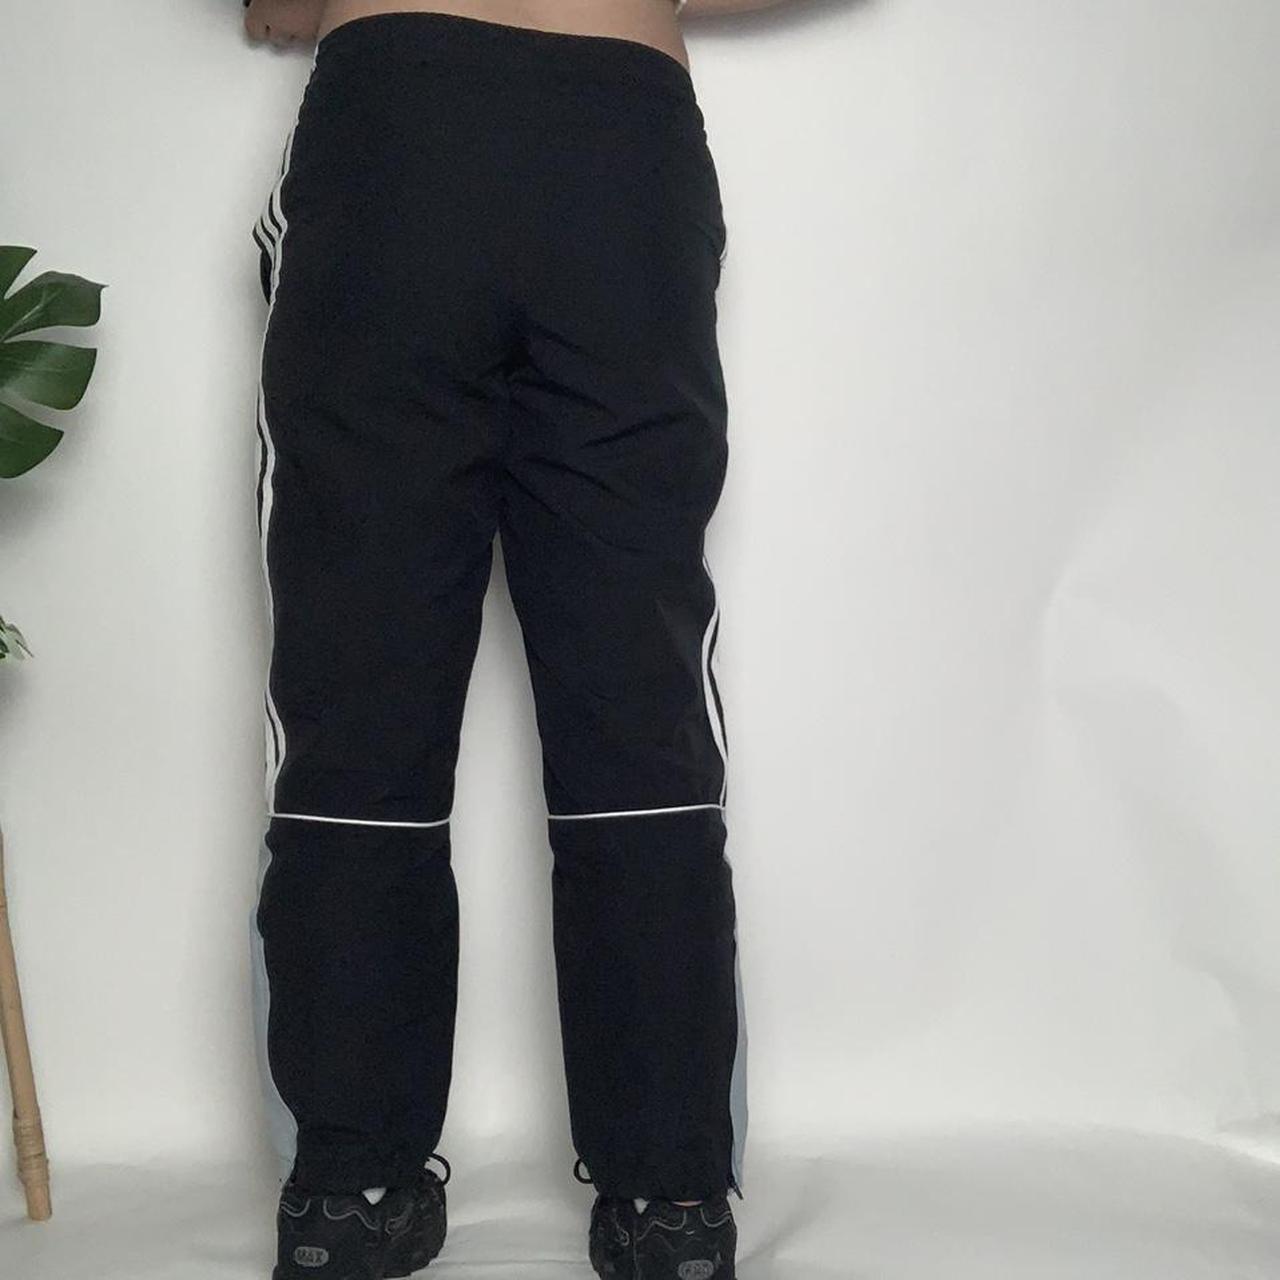 Adidas vintage unisex 90’s black and grey track pants